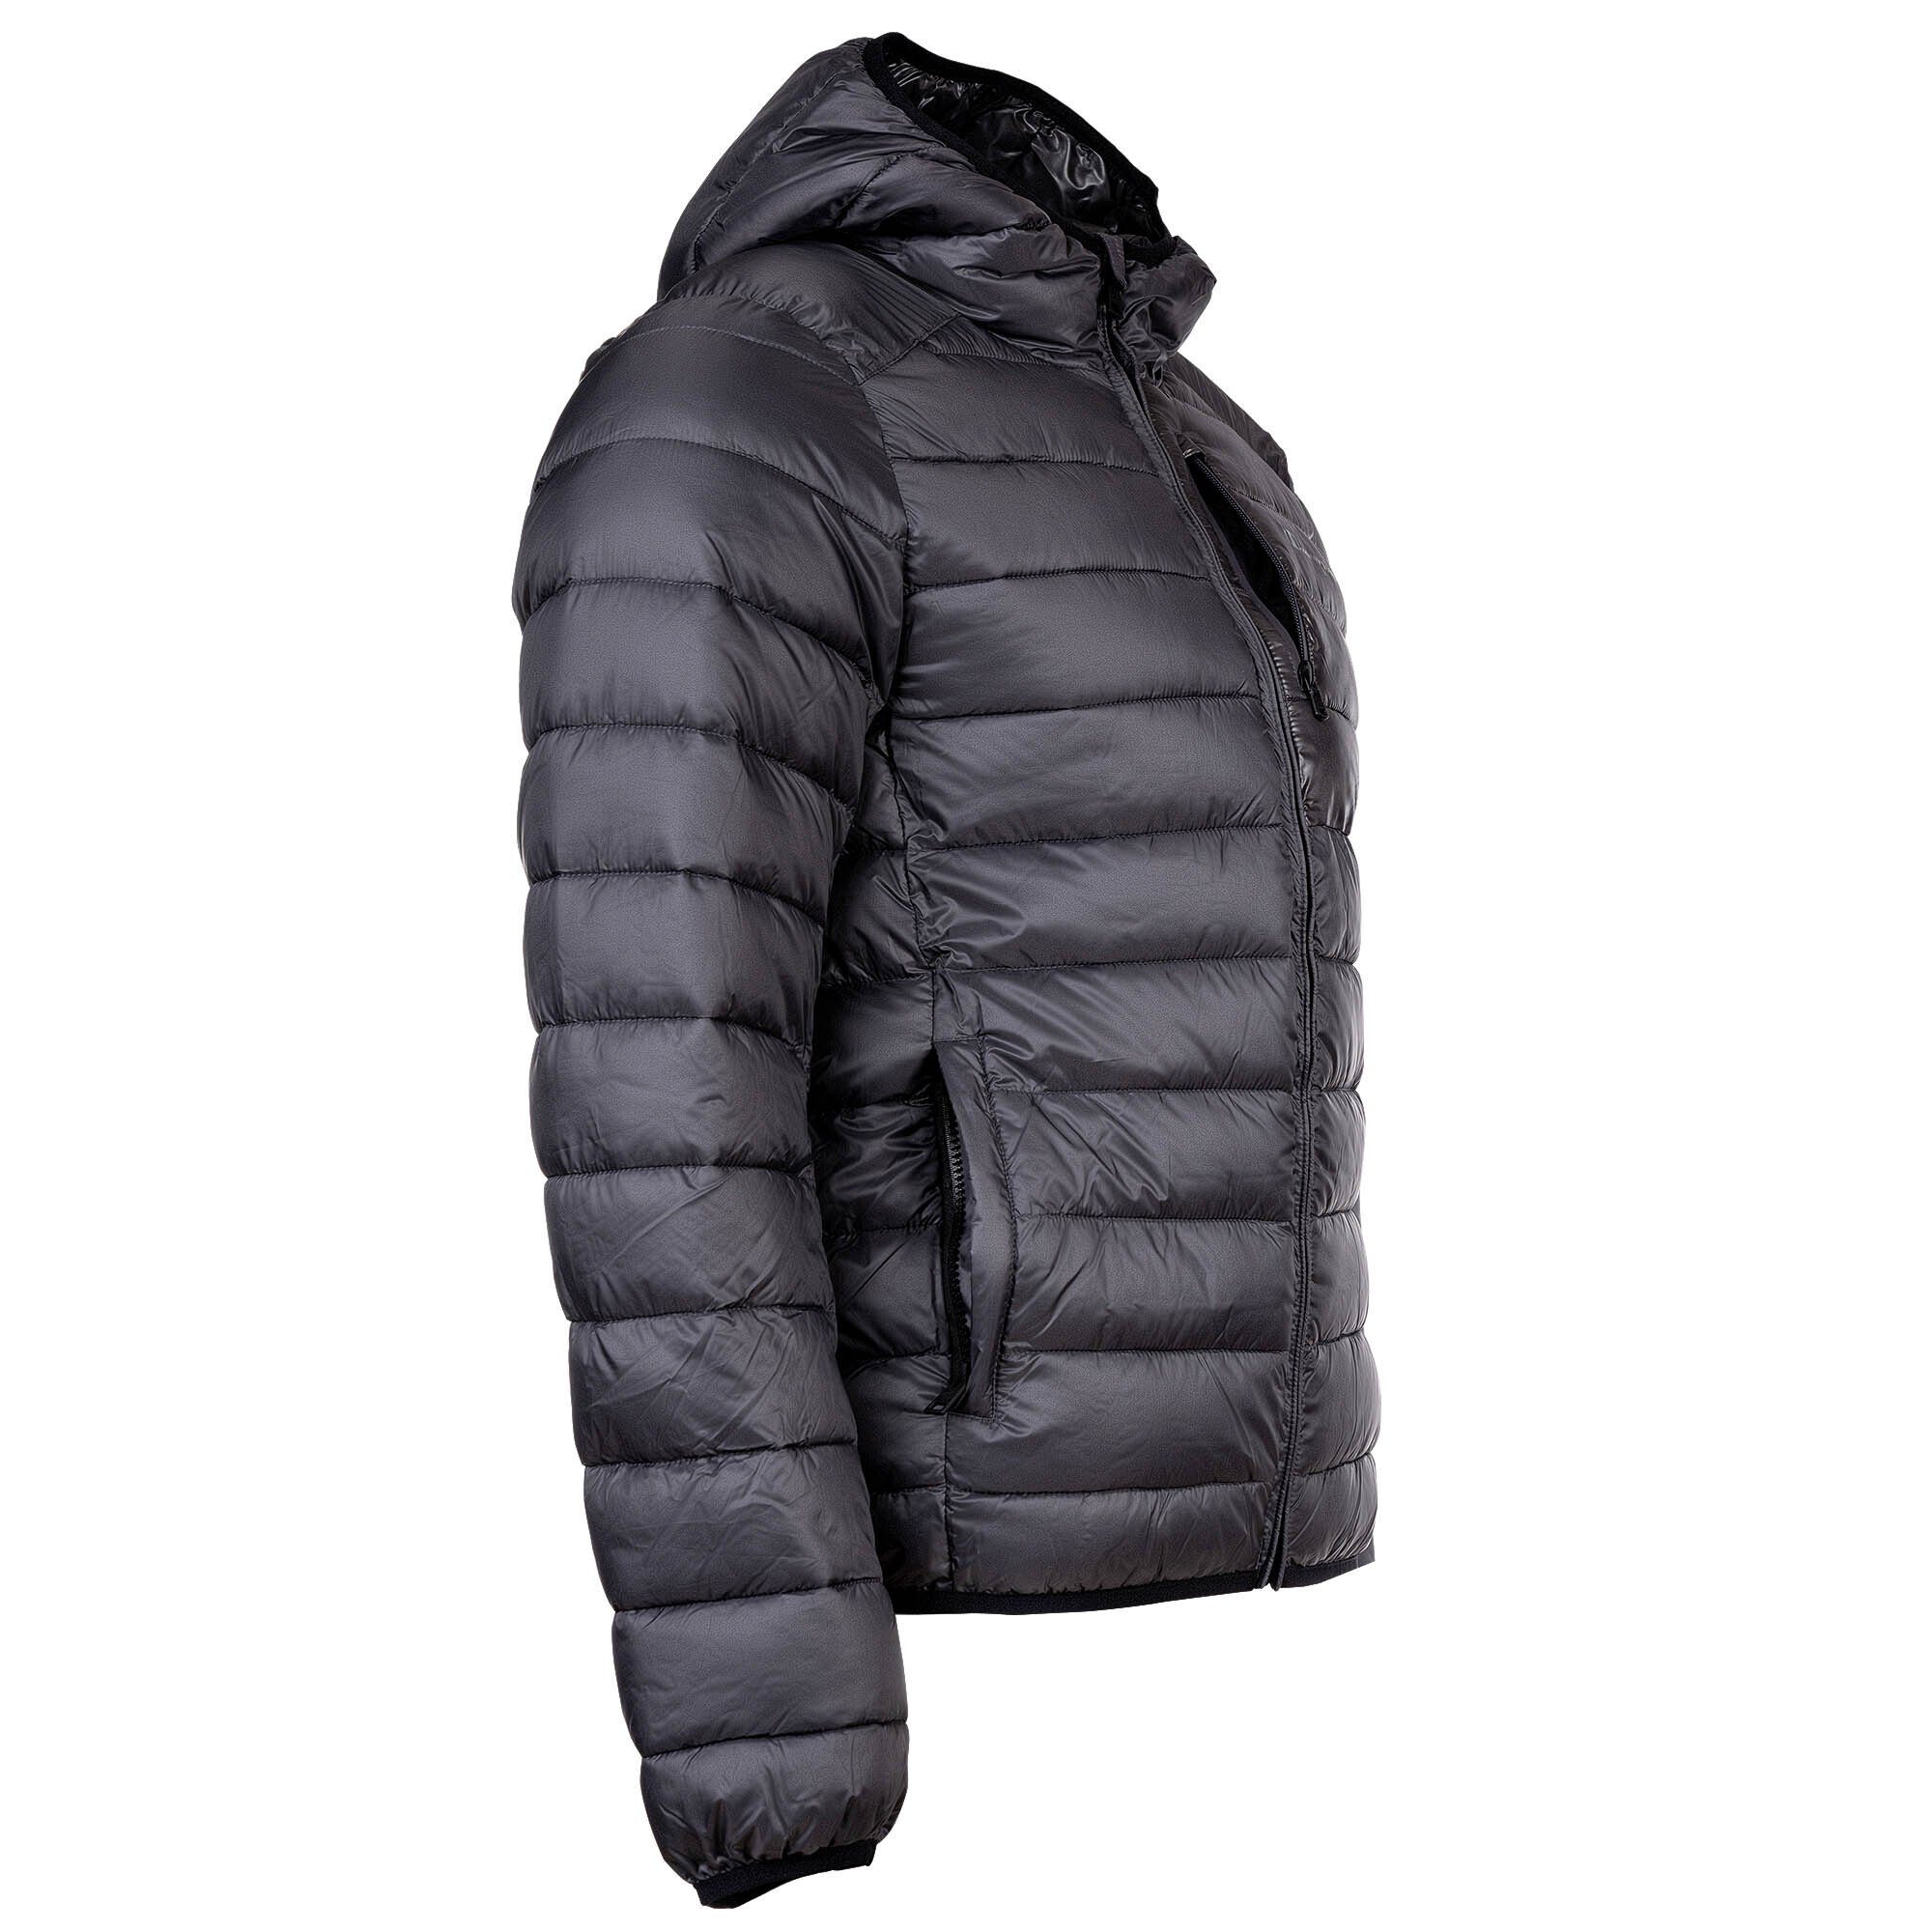 Hooded - Steppjacke Outdoor Grau Champion Jacket, Herren Jacke